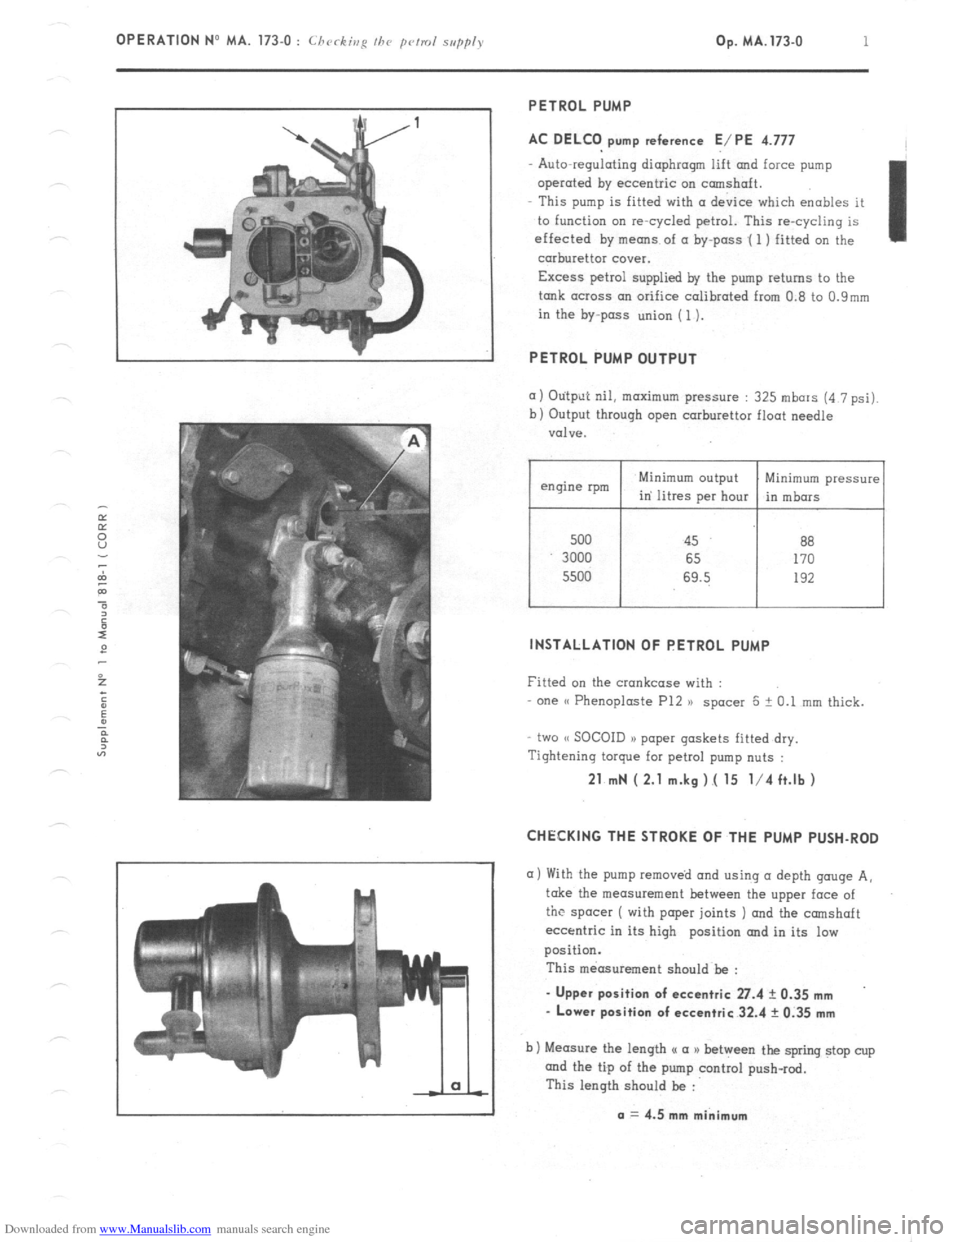 Citroen CX 1975 1.G Workshop Manual Downloaded from www.Manualslib.com manuals search engine OPERATION No MA. 173-O : Chrrkivp fhr prmd s,,pp/> Op. MA. 173.0 1 
PETROL PUMP 
AC DELCO pump reference E/PE 4.777 
Auto-regulating diaphragm 